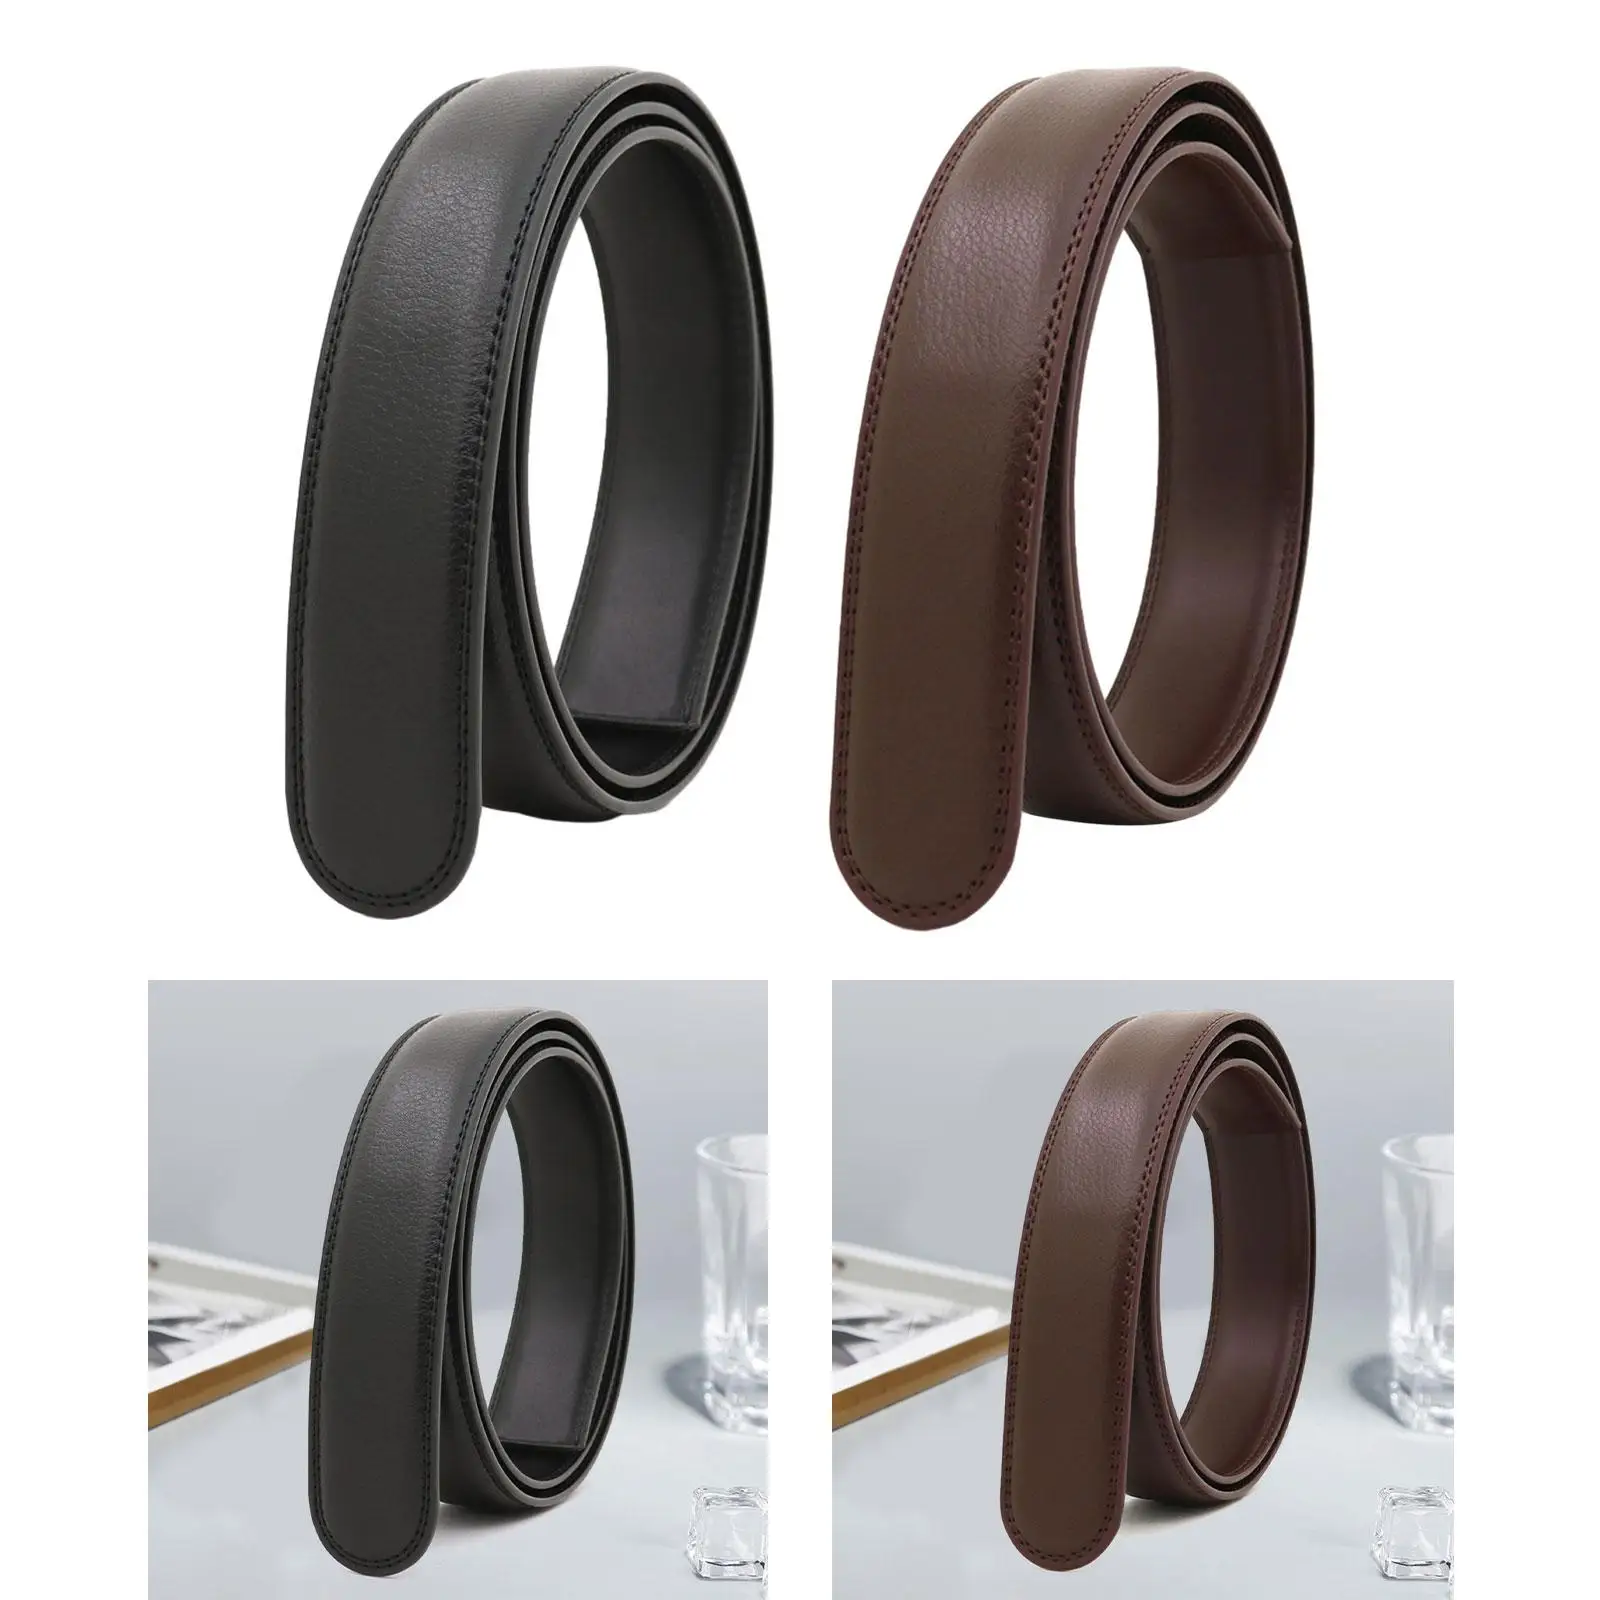 Replacement Belt Strap Simple Stylish Ratchet Belt Strap Automatic Belt Strap for Events Business Shopping Travel Suit Pants